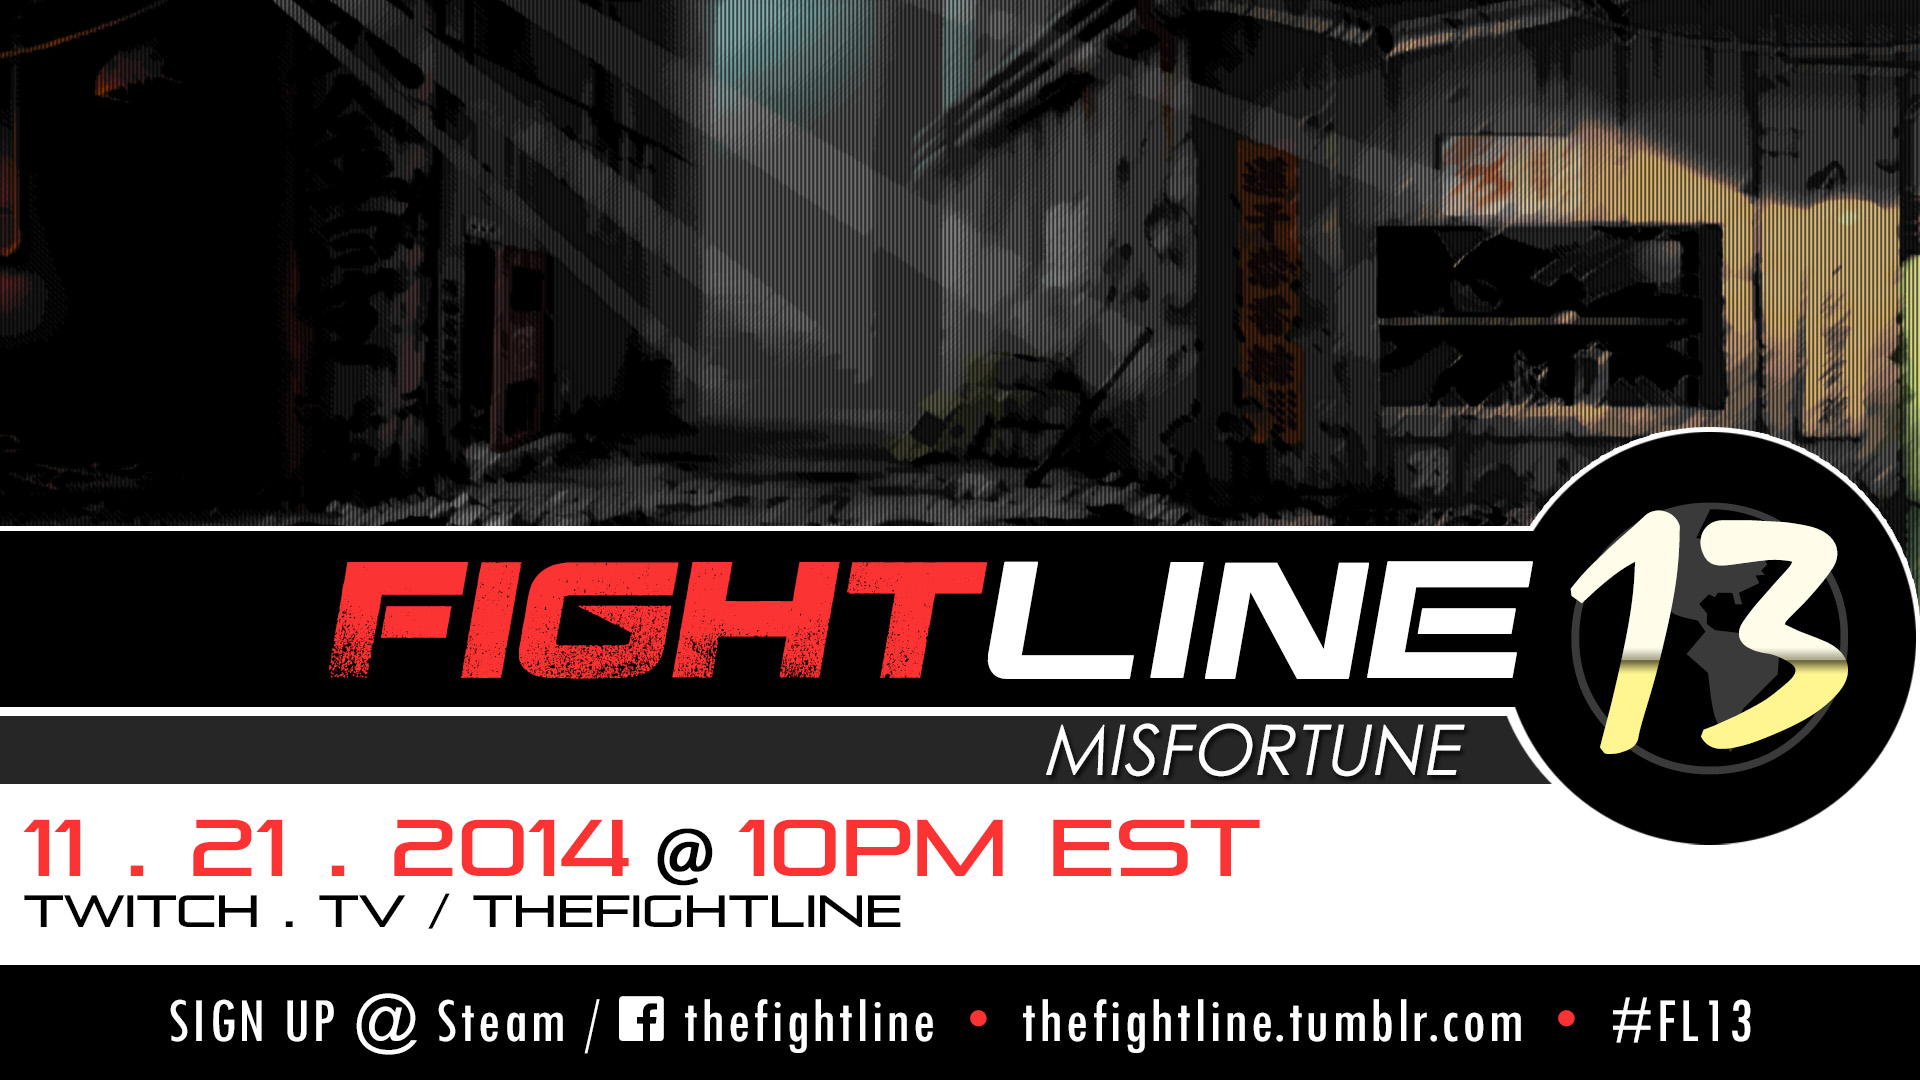 [IMAGE] Fightline 13 Promo